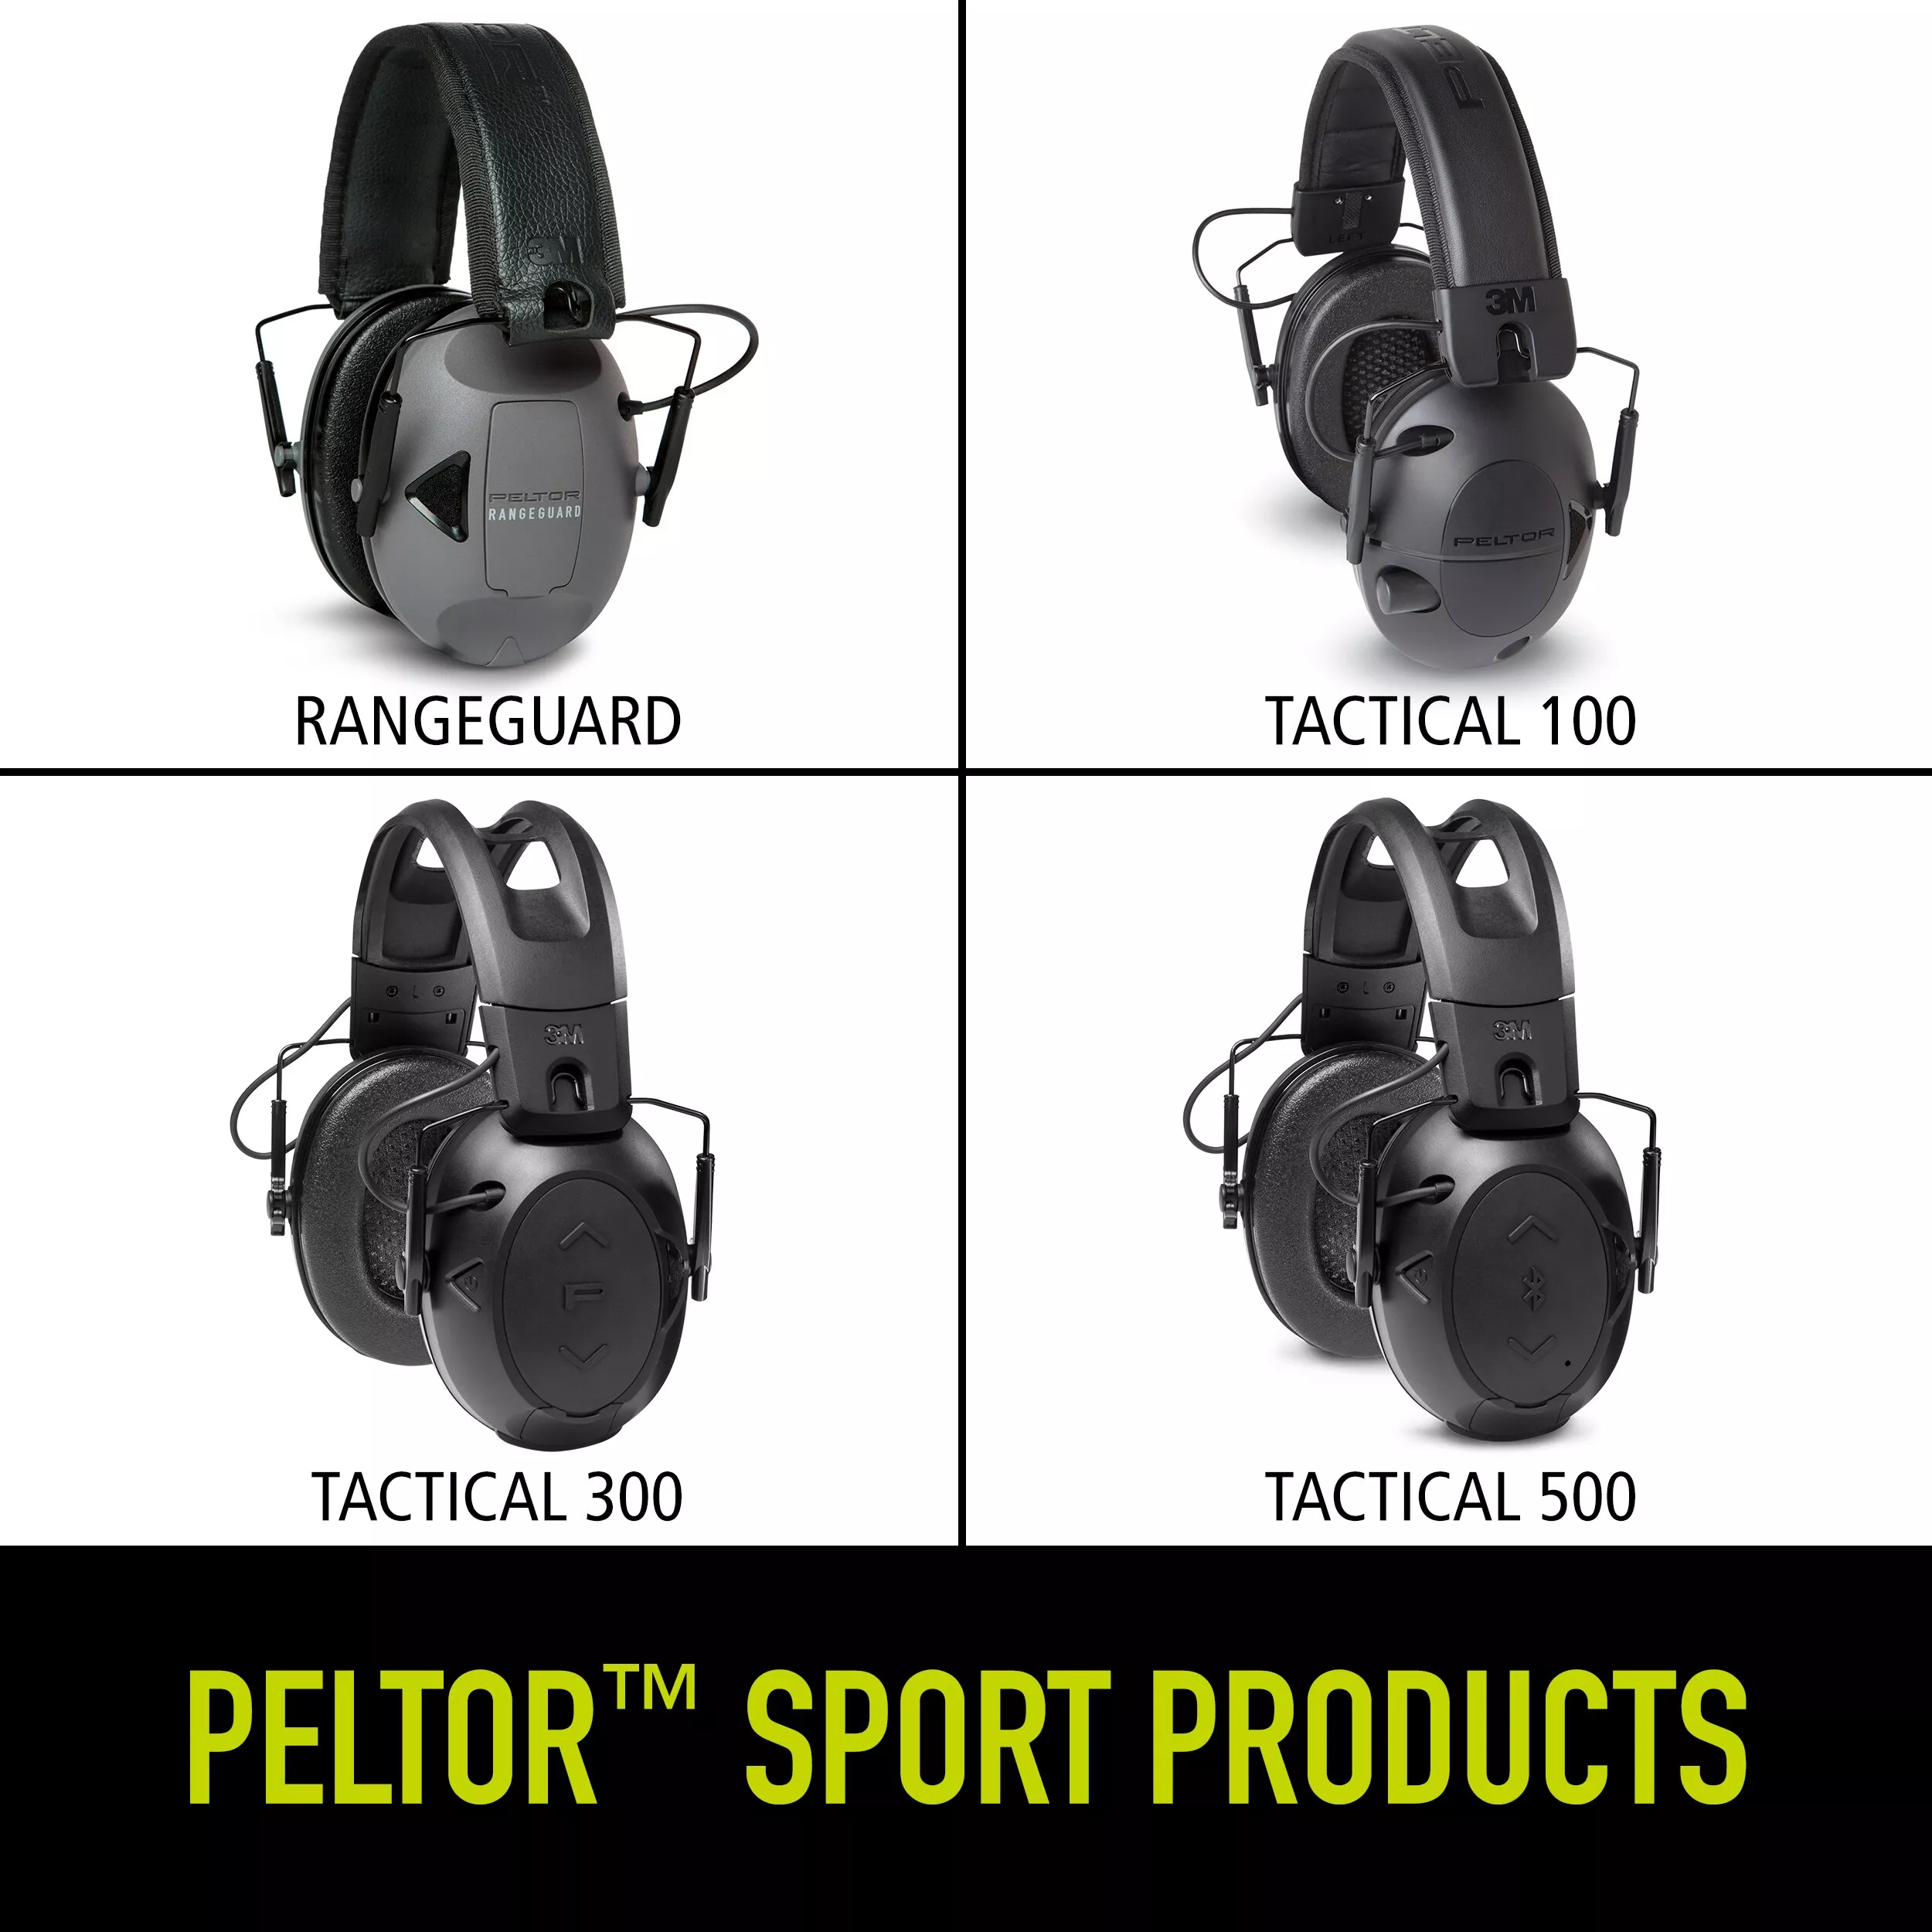 SKU 7100117618 | Peltor™ Sport Tactical 300 Electronic Hearing Protector